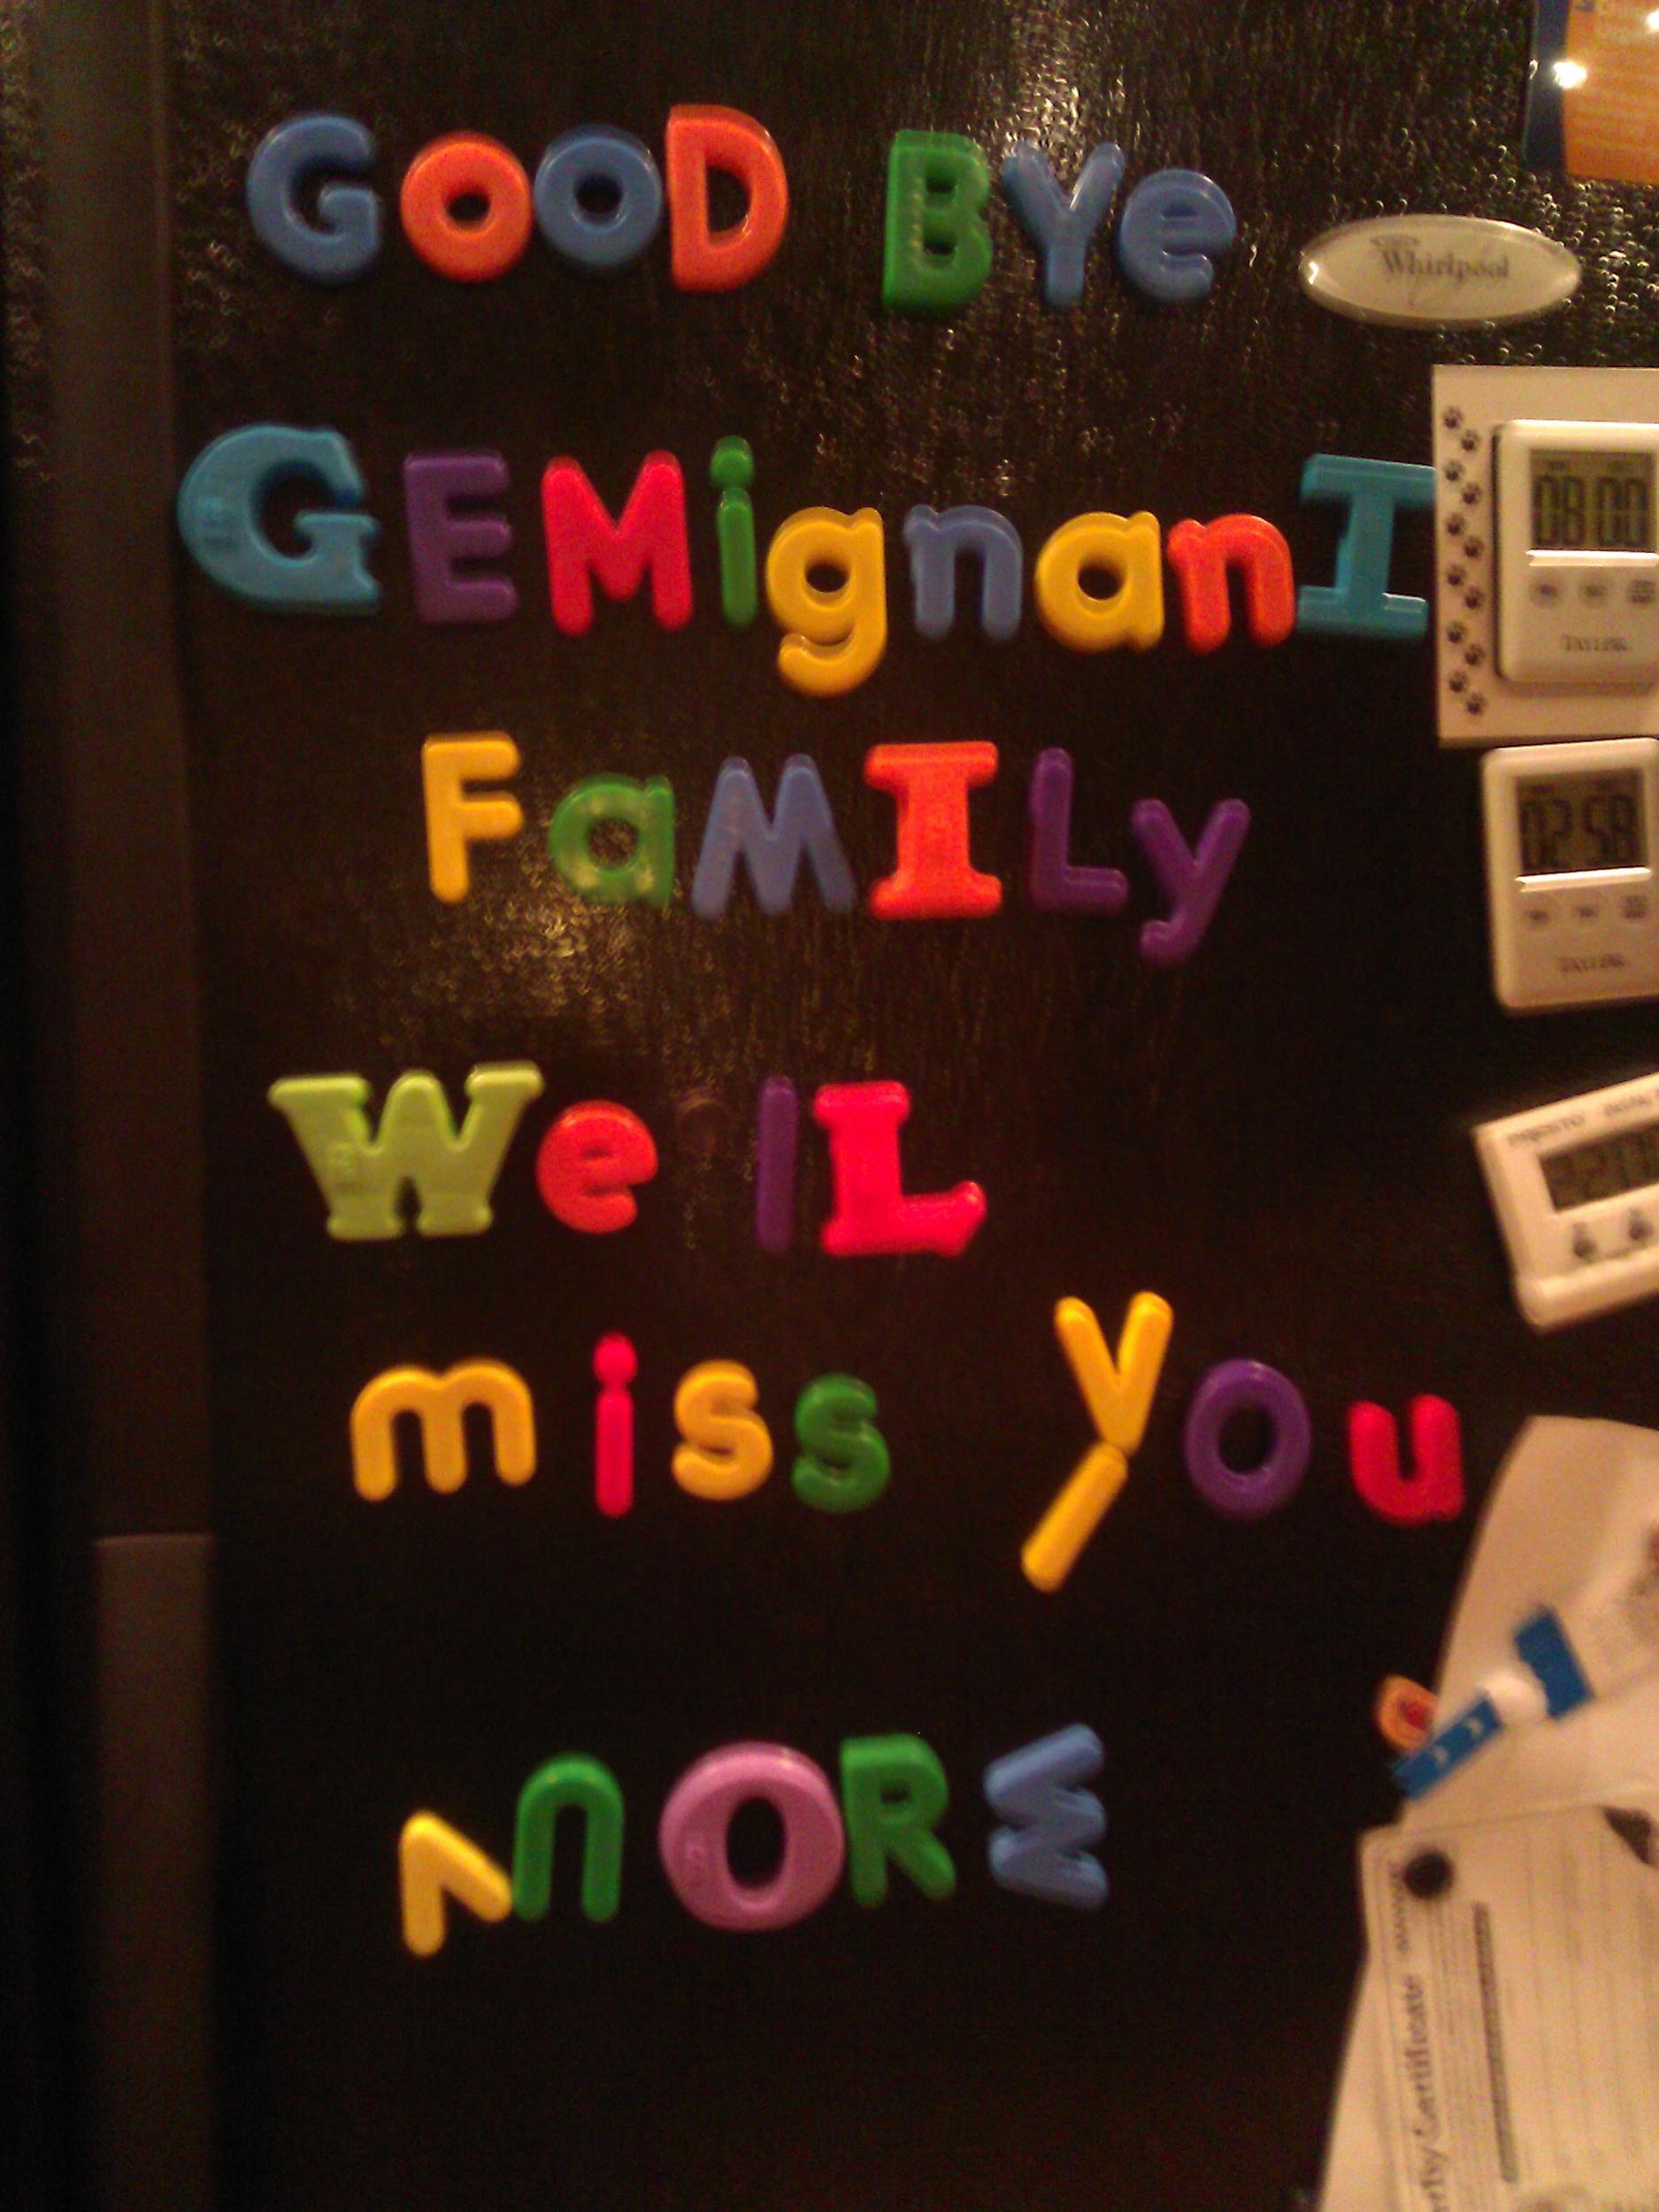 Loving use of fridge magnets.